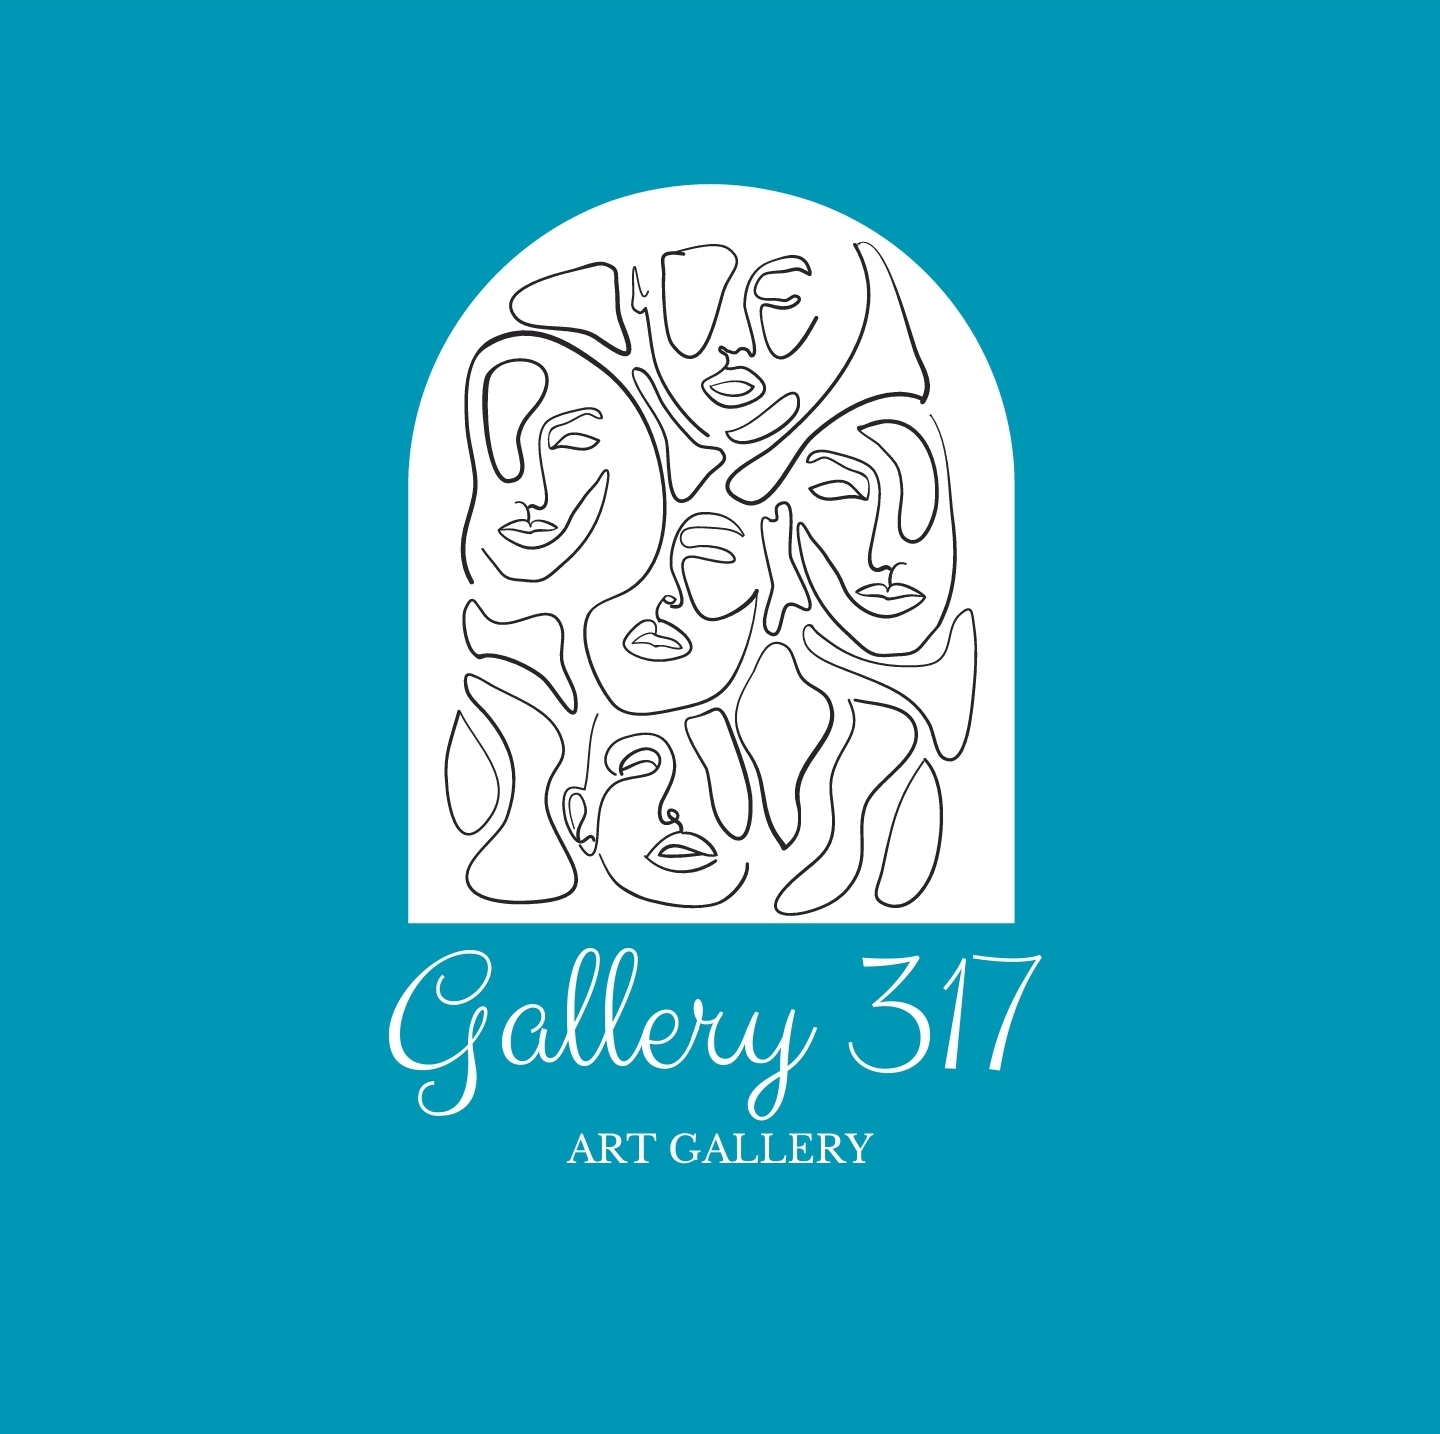 Gallery 317